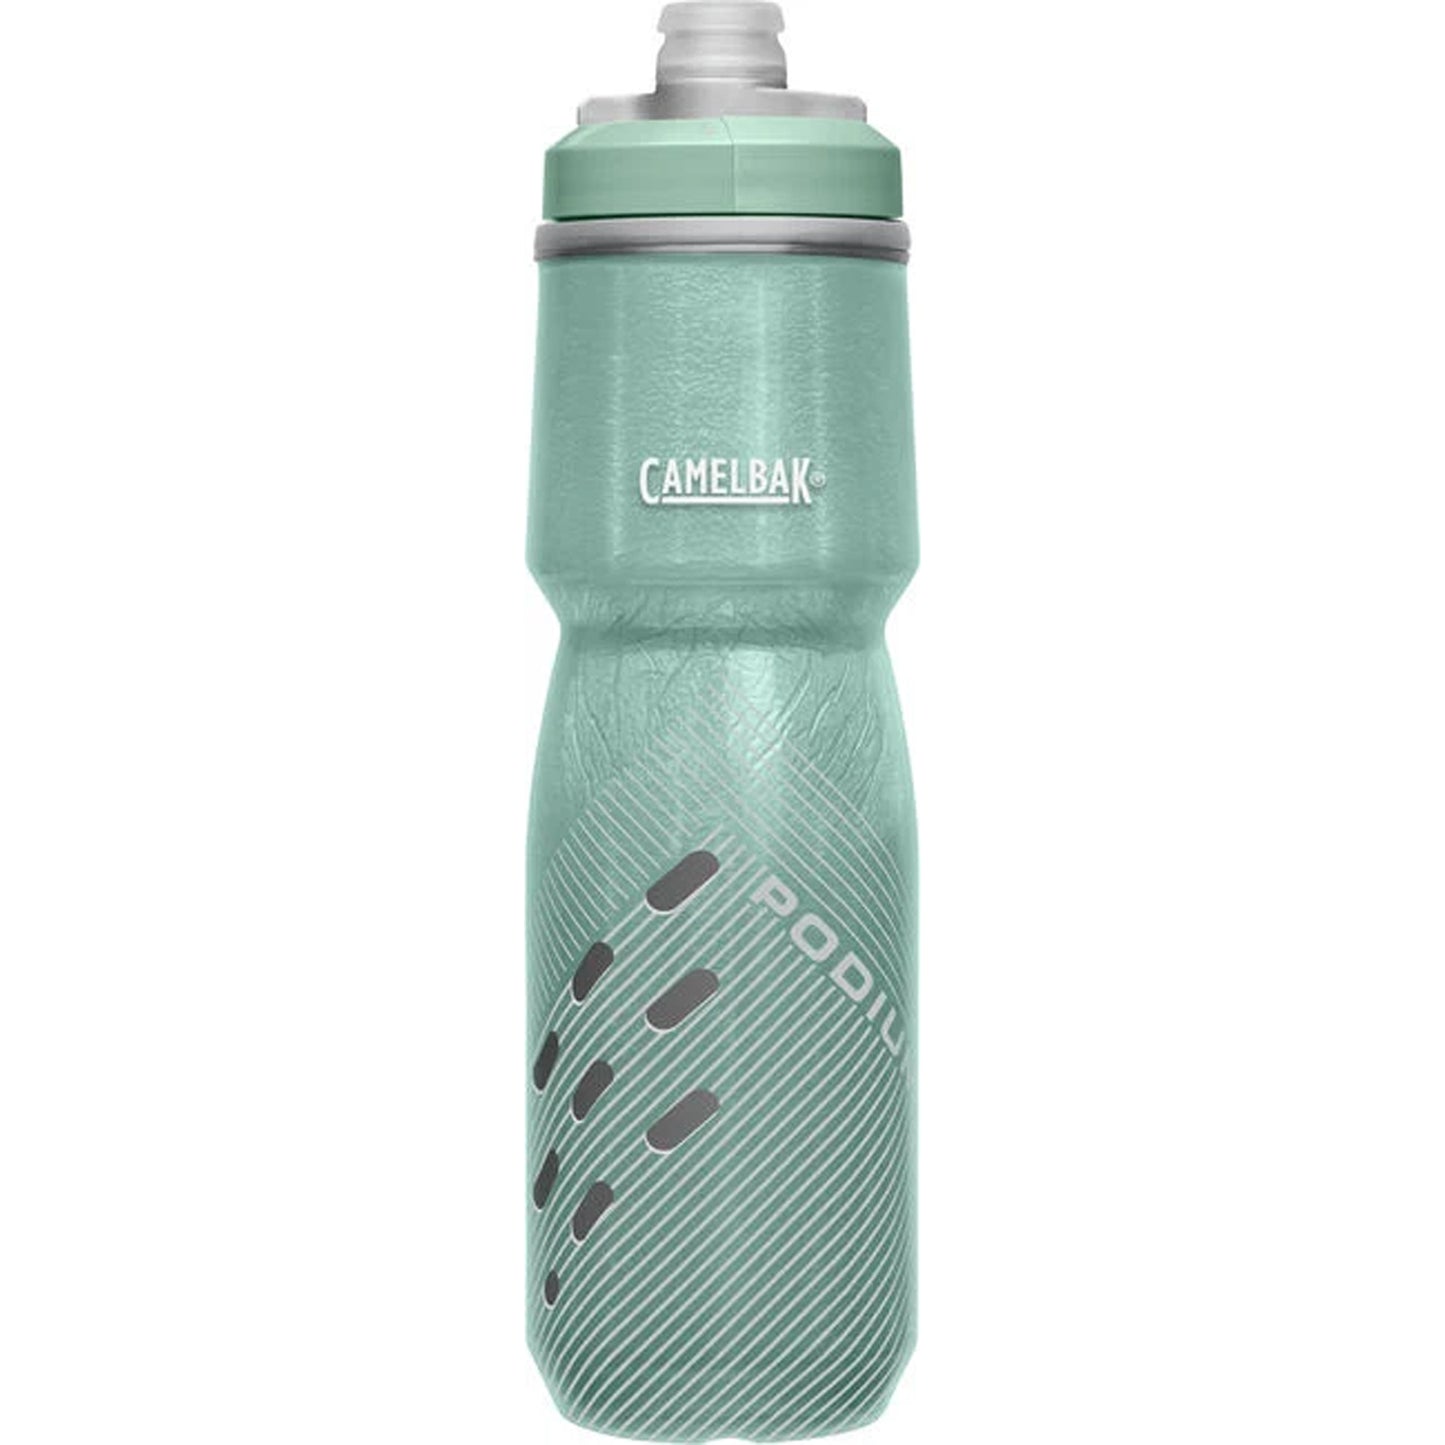 Camelbak Podium Chill Bottle, Saga Perforated - 24OZ/710 ML - Best Price online Prokicksports.com